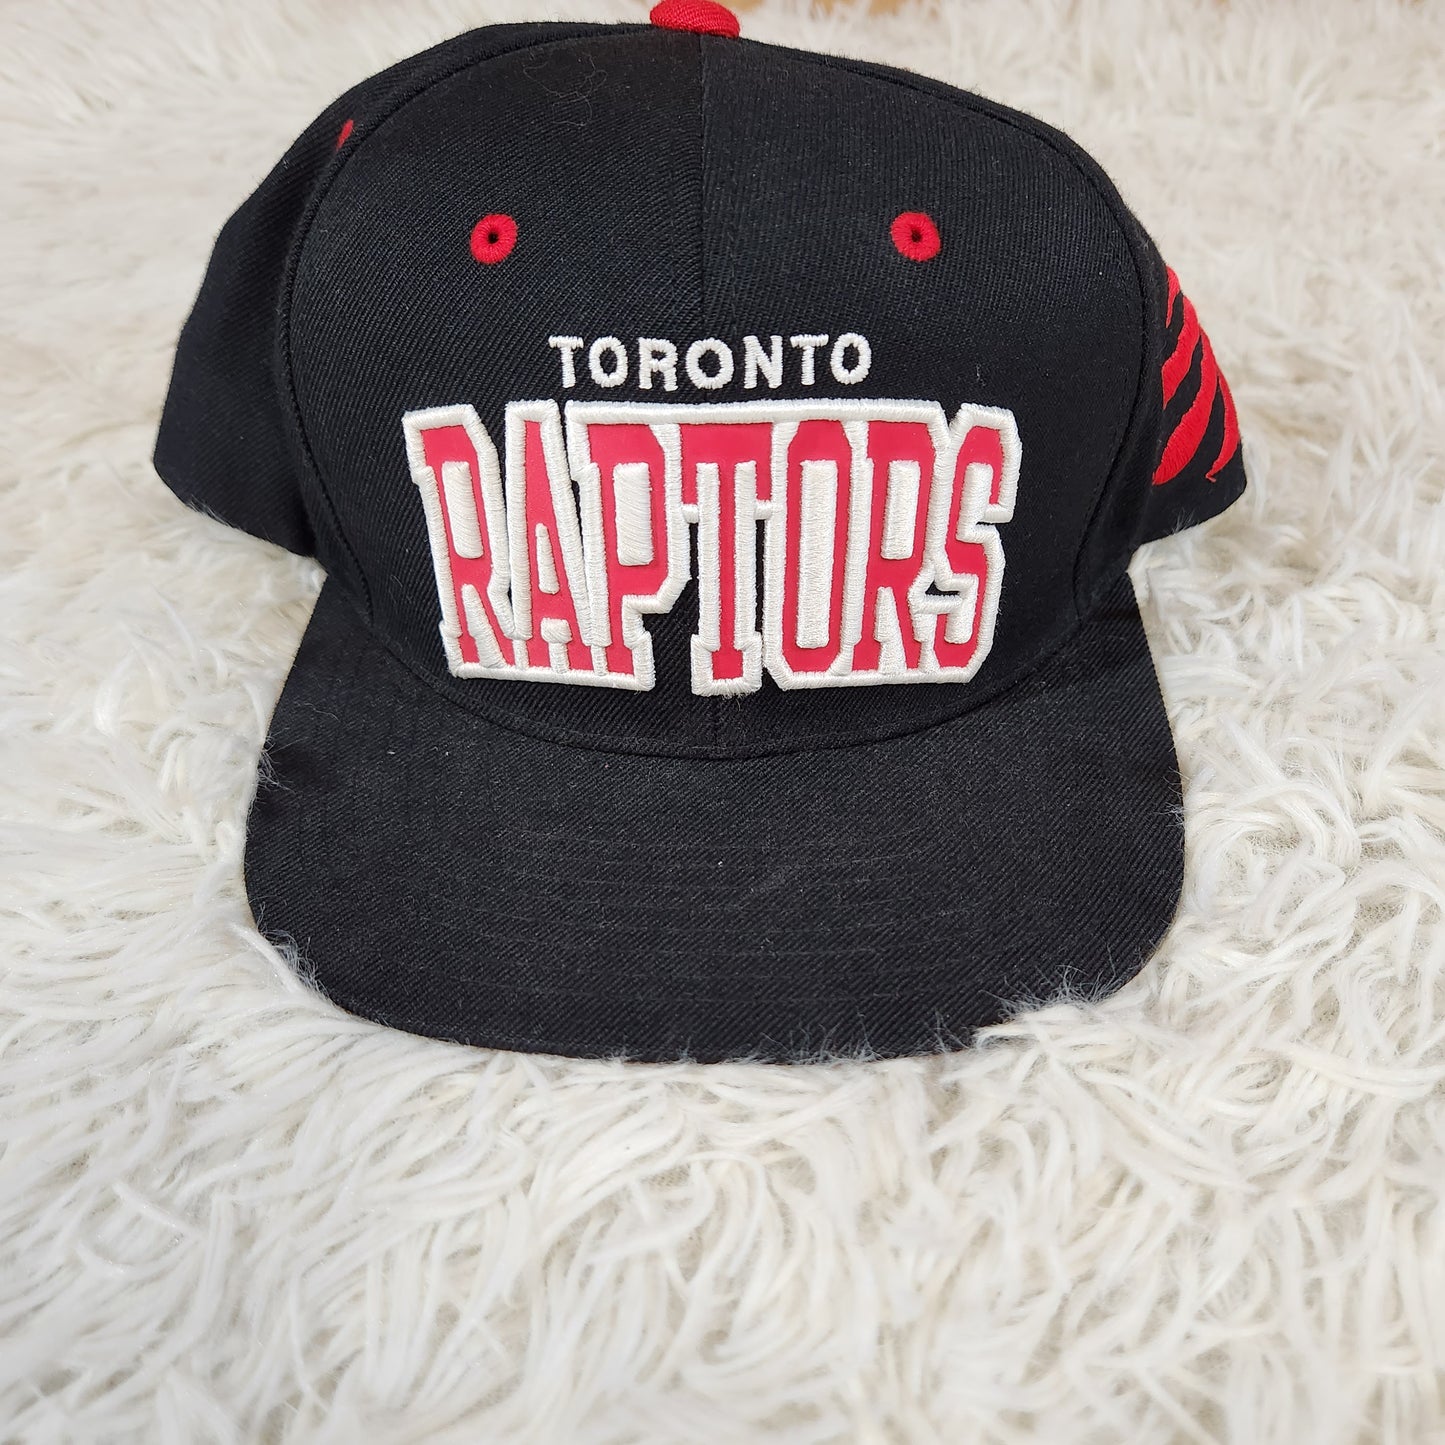 Mitchell & Ness "Toronto Raptors" Snapback Cap Black/Red